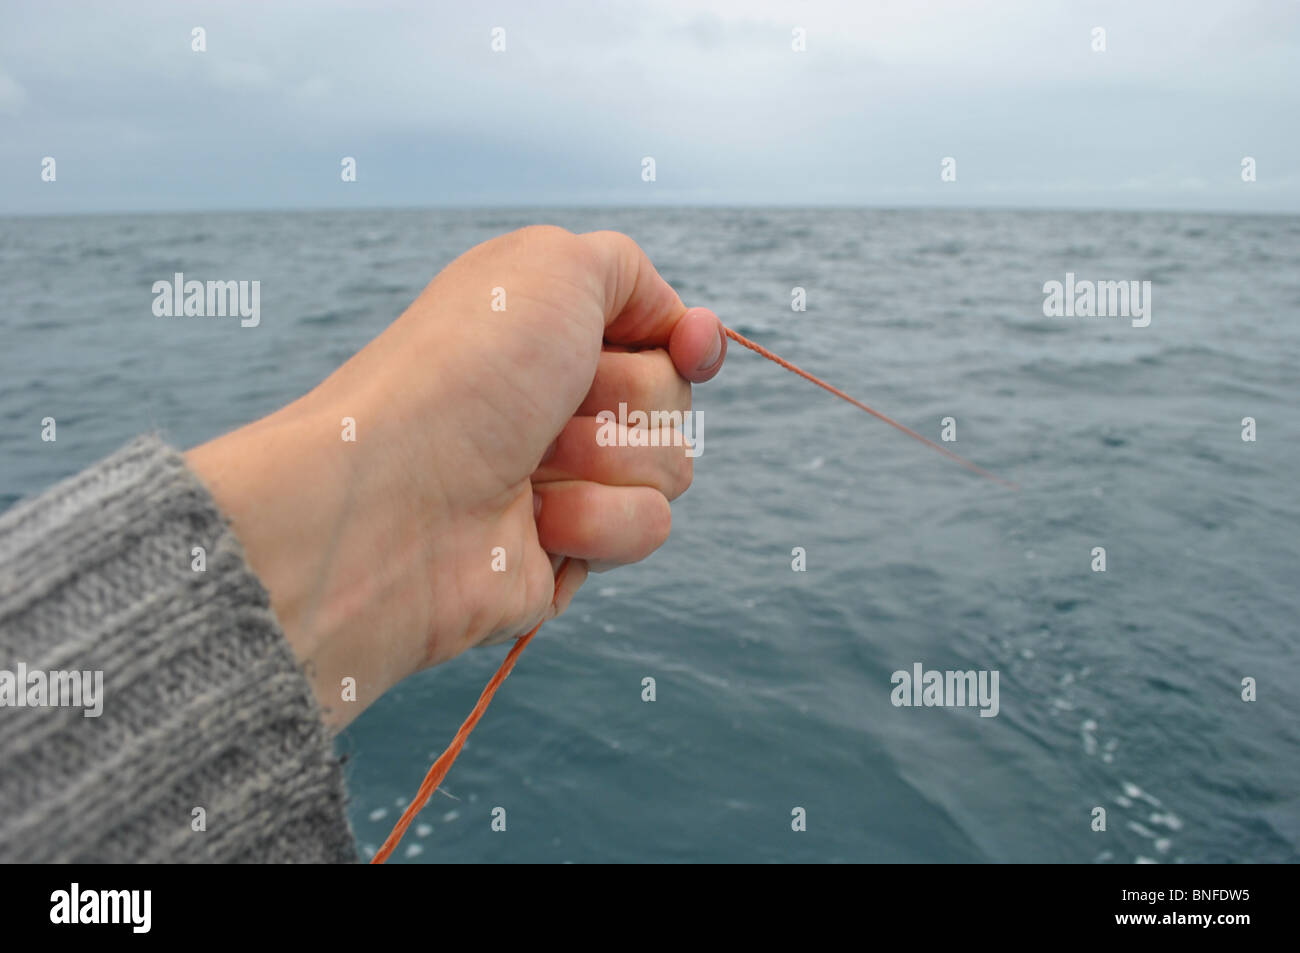 Spanish mackerel fish caught on hook and fishing line in ocean Stock Photo  - Alamy